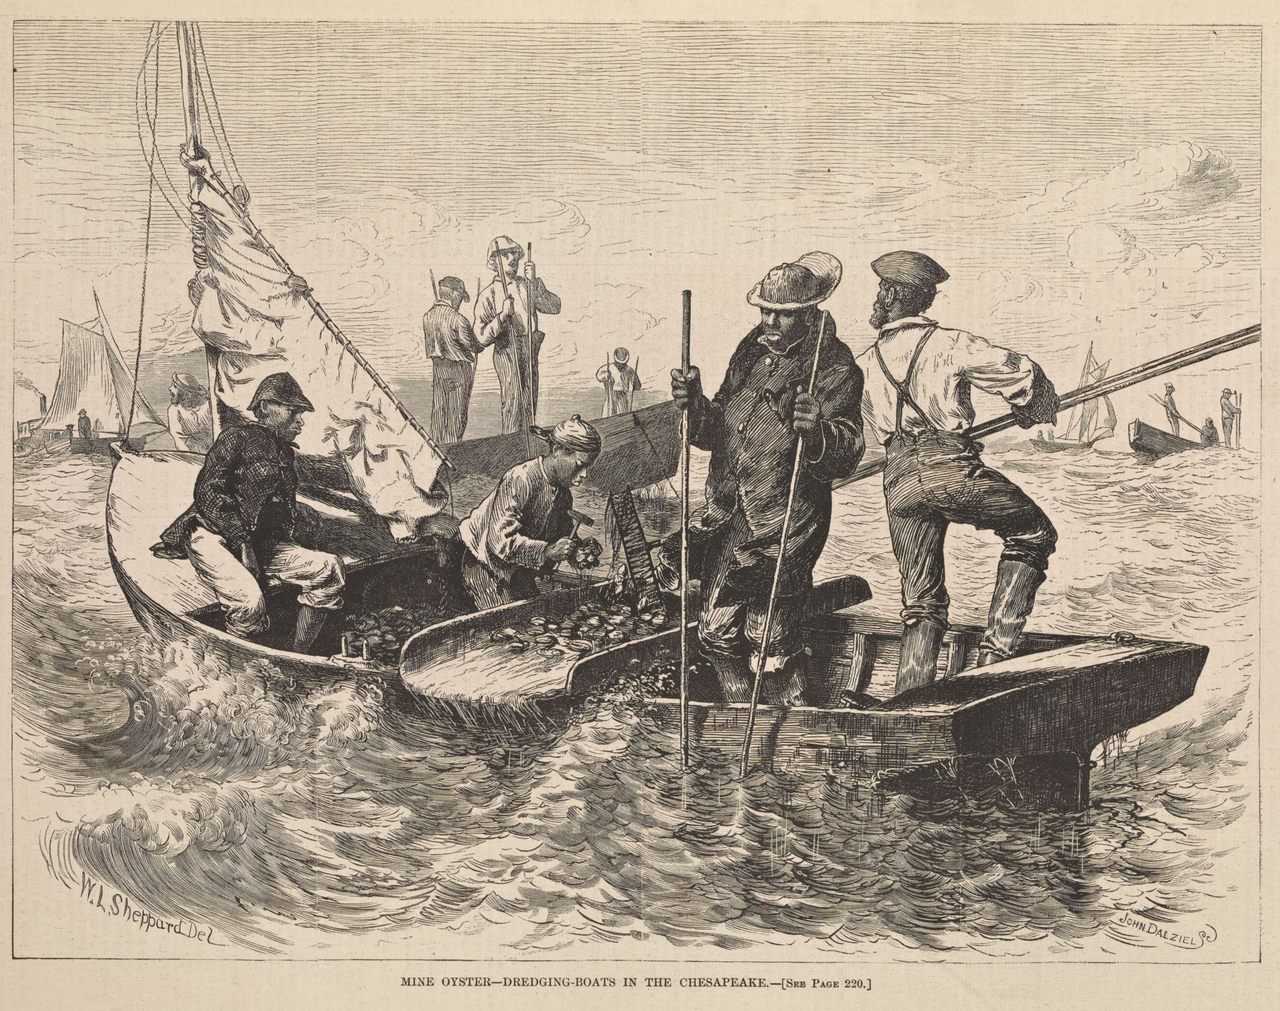 Oystermen were often African American.